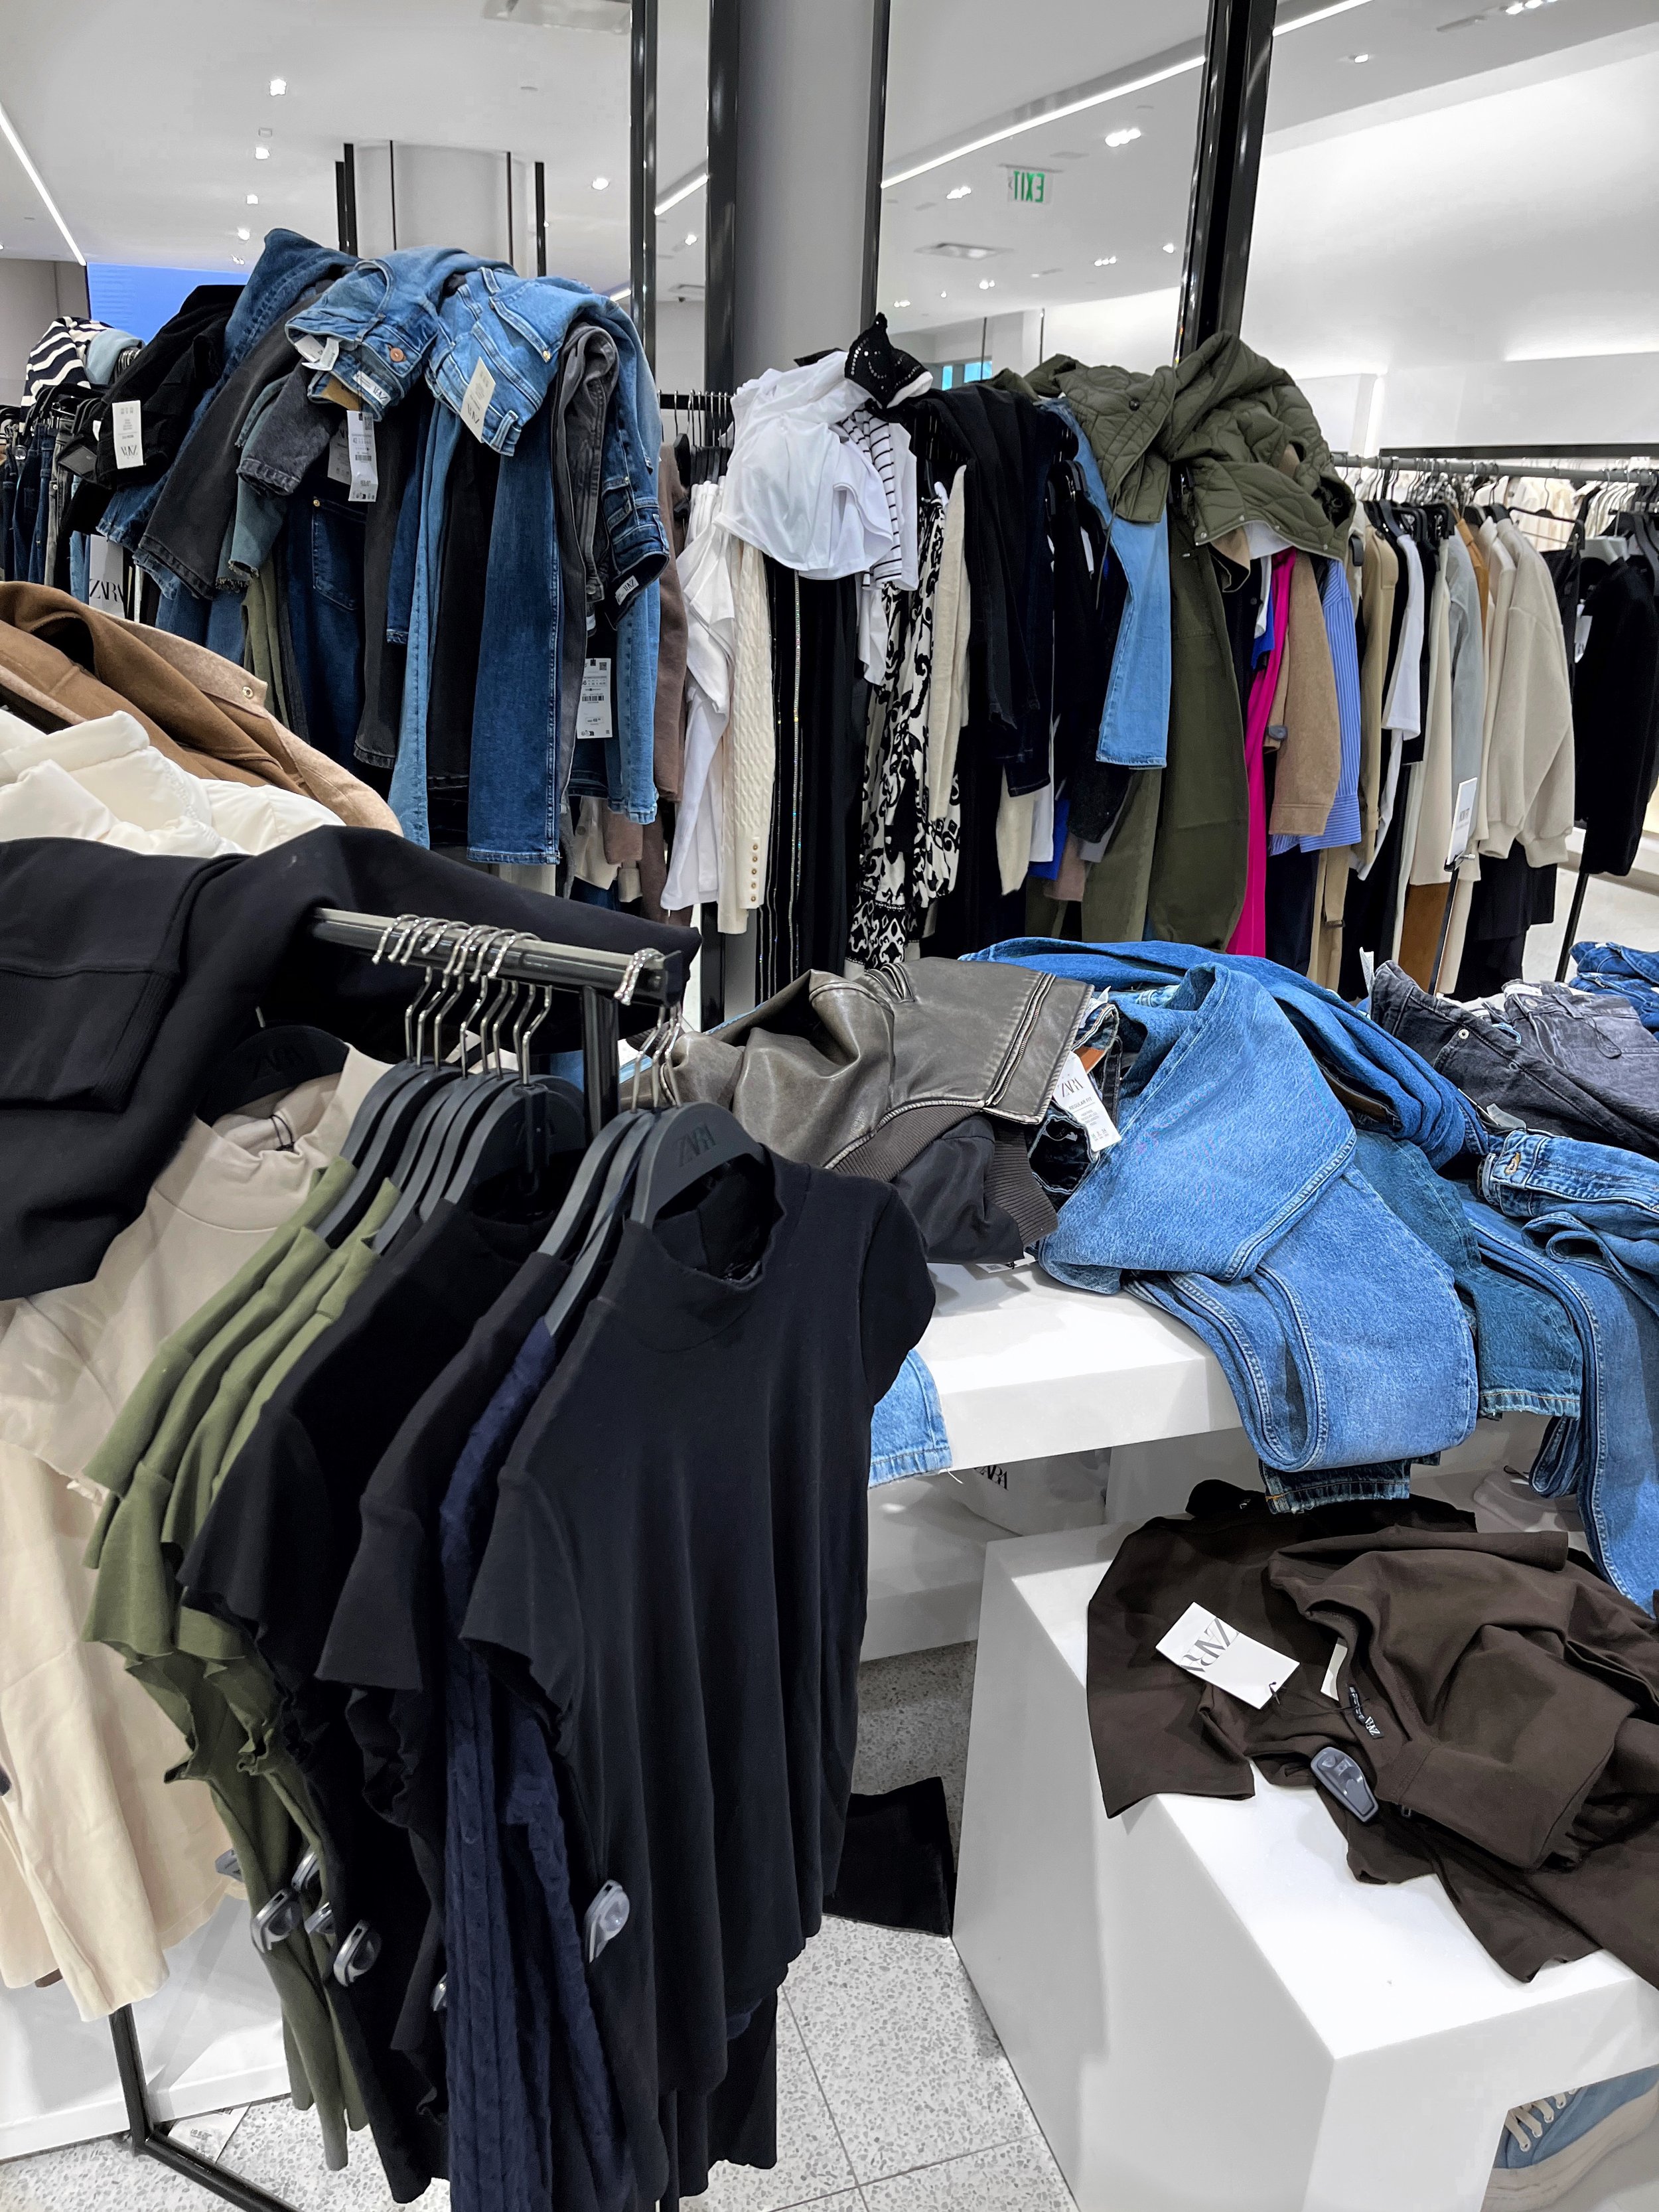 New study shapes understanding of adaptive clothing customer needs